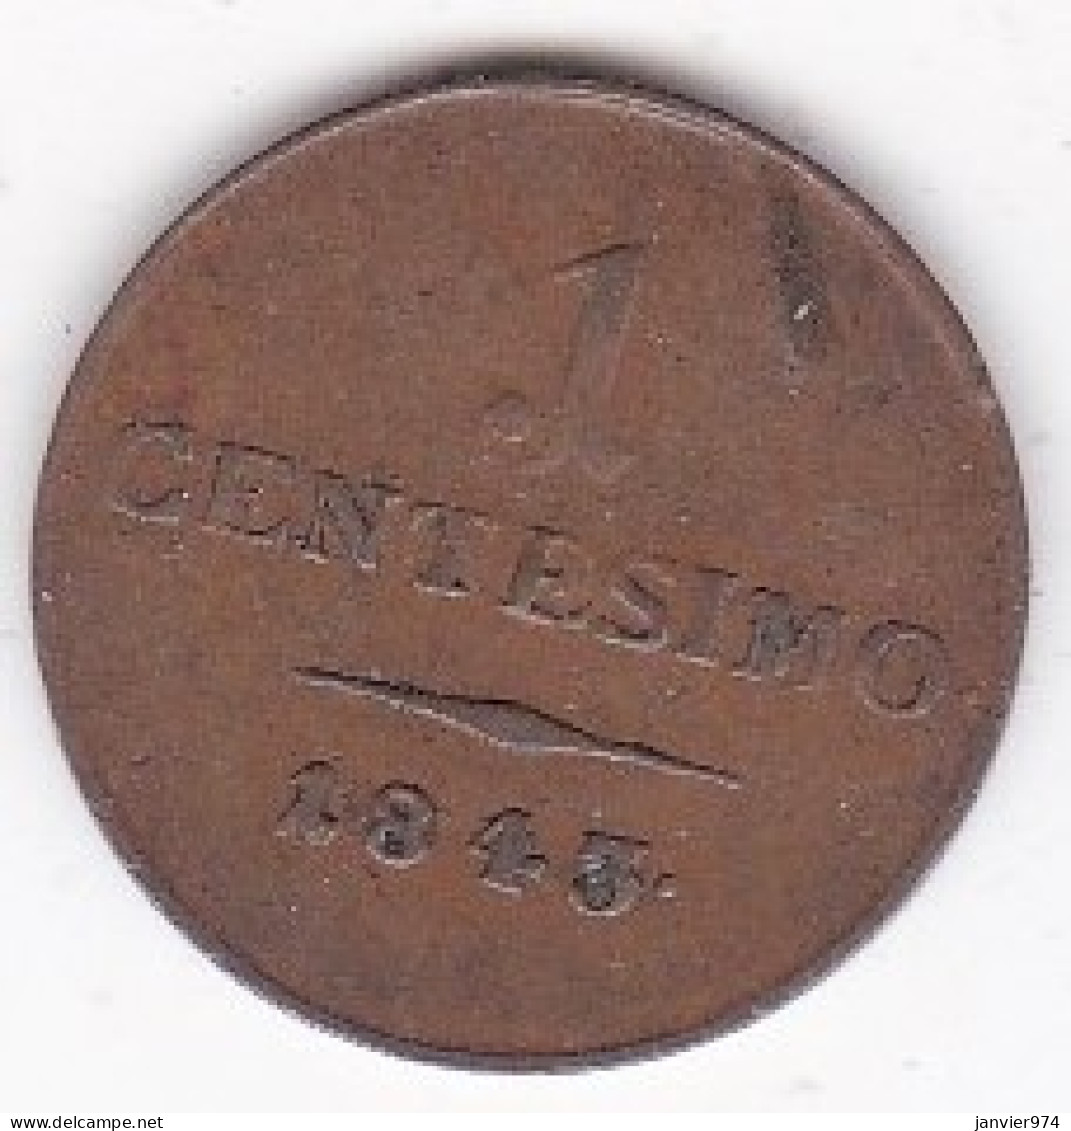 Lombardo – Veneto. 1 Centesimo 1843 V Venise. Ferdinand I , En Cuivre. - Lombardie-Vénétie